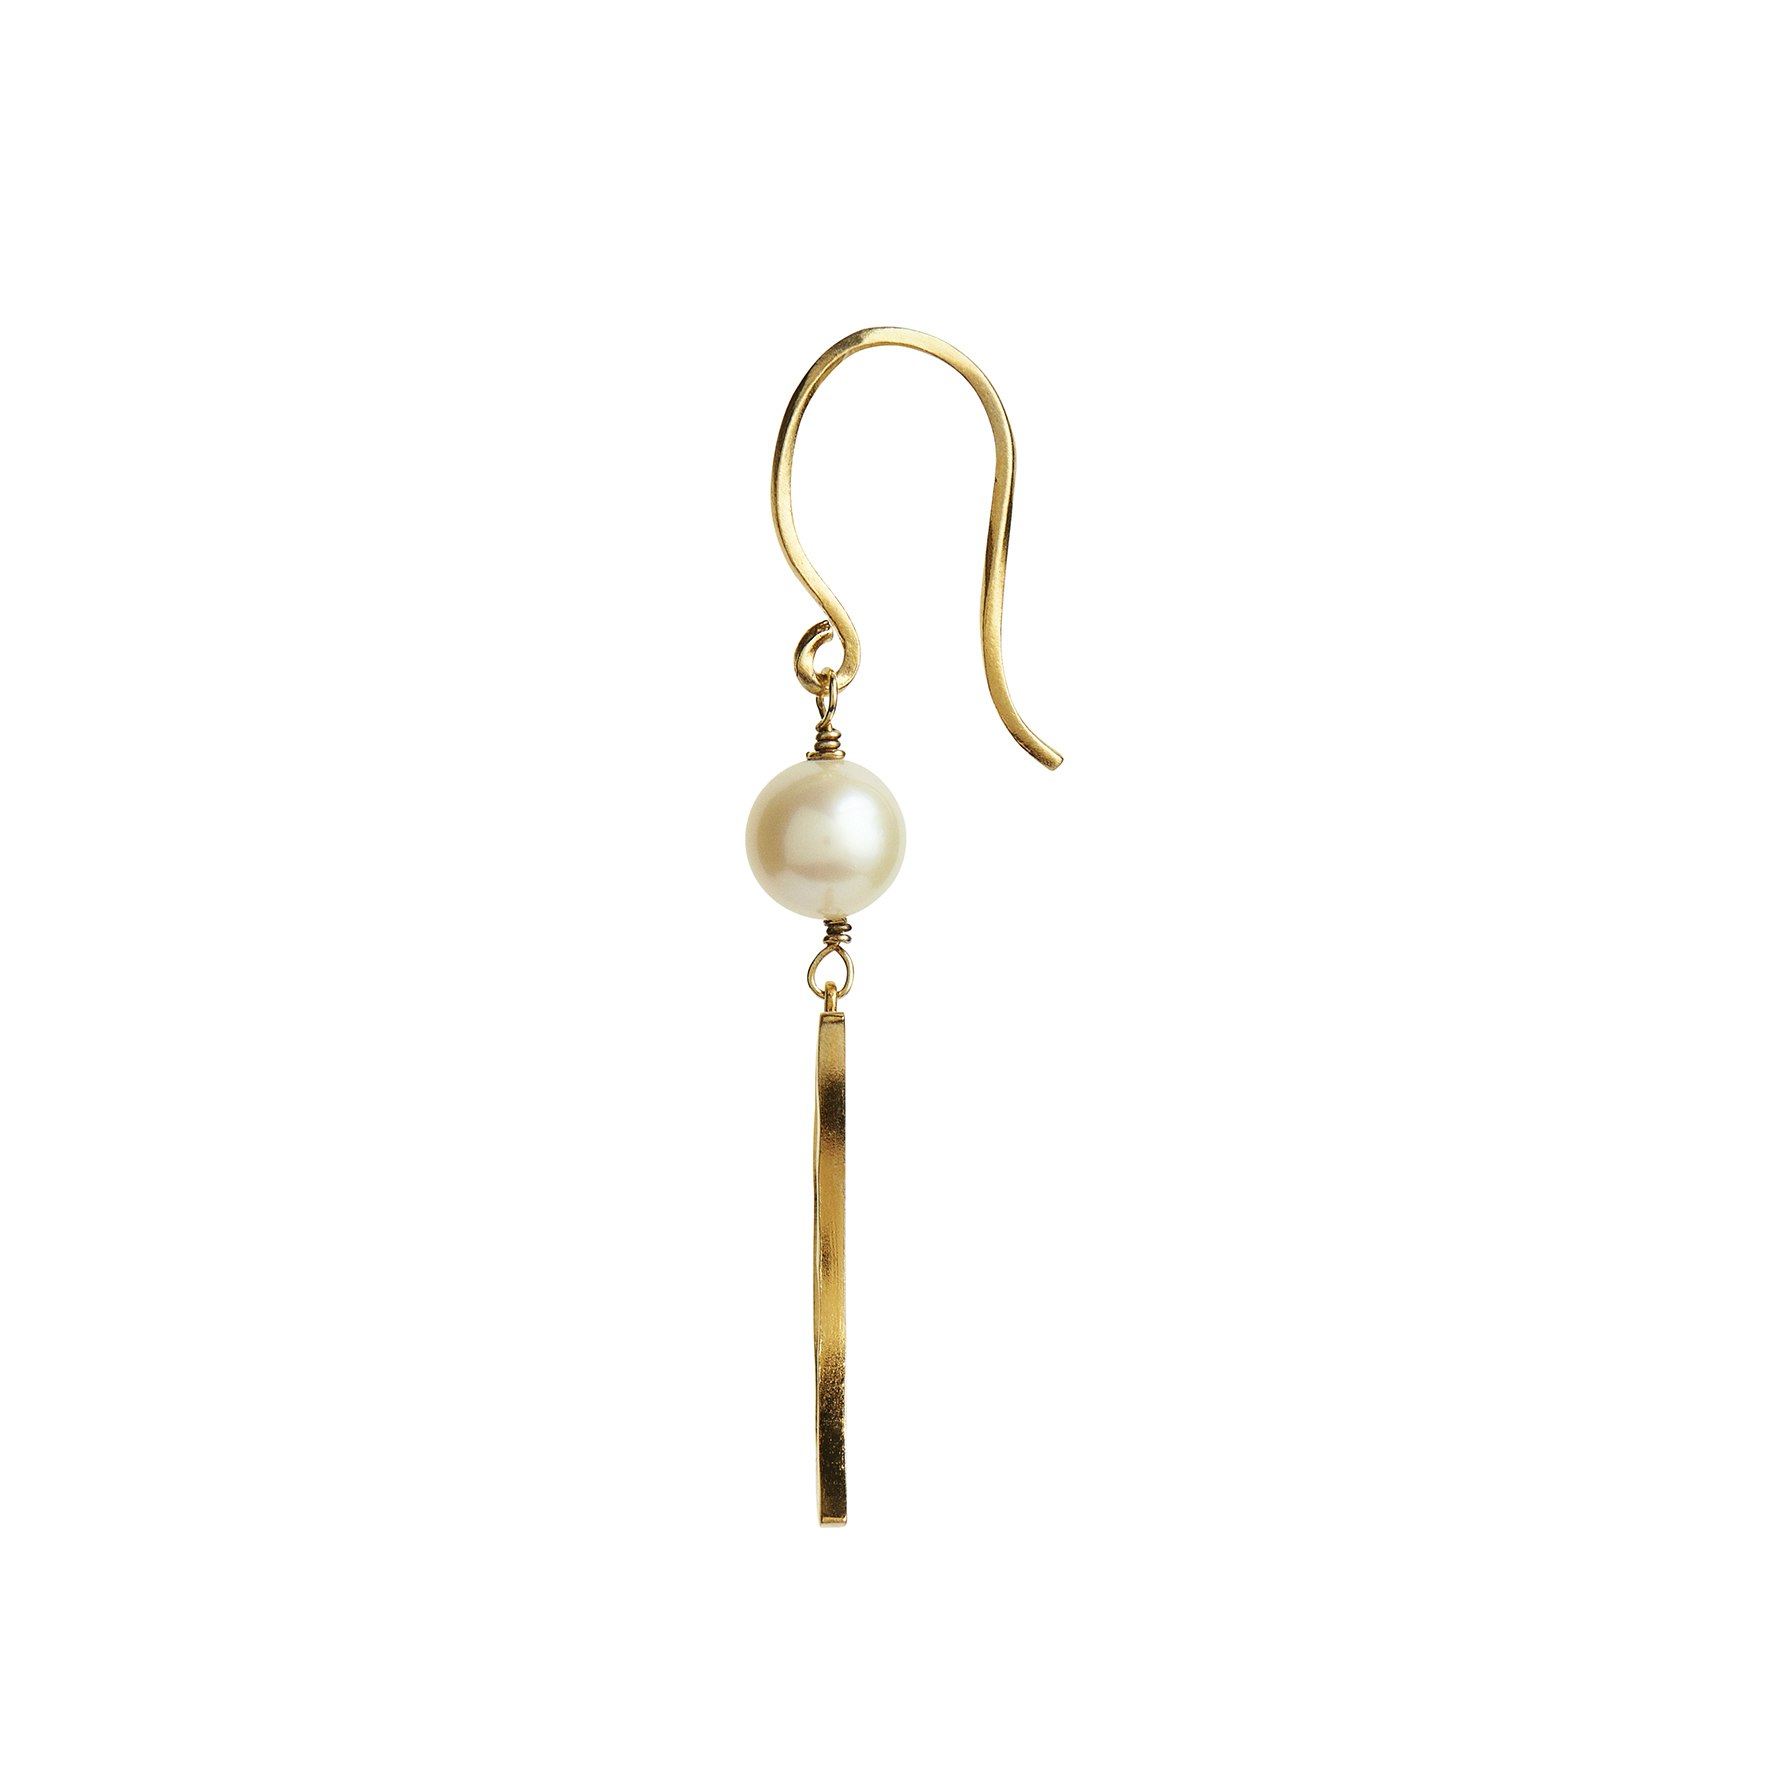 Bella Moon Earring With Pearl från STINE A Jewelry i Förgyllt-Silver Sterling 925